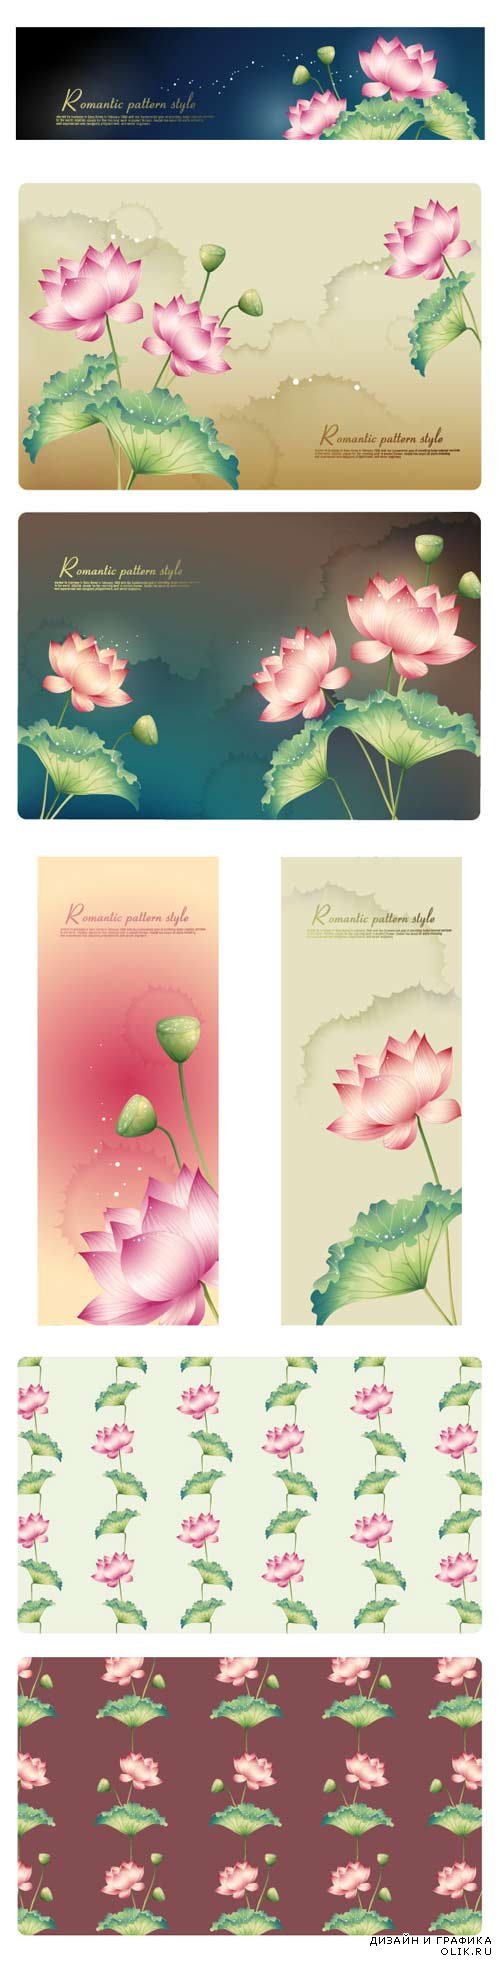 Romantic floral banners